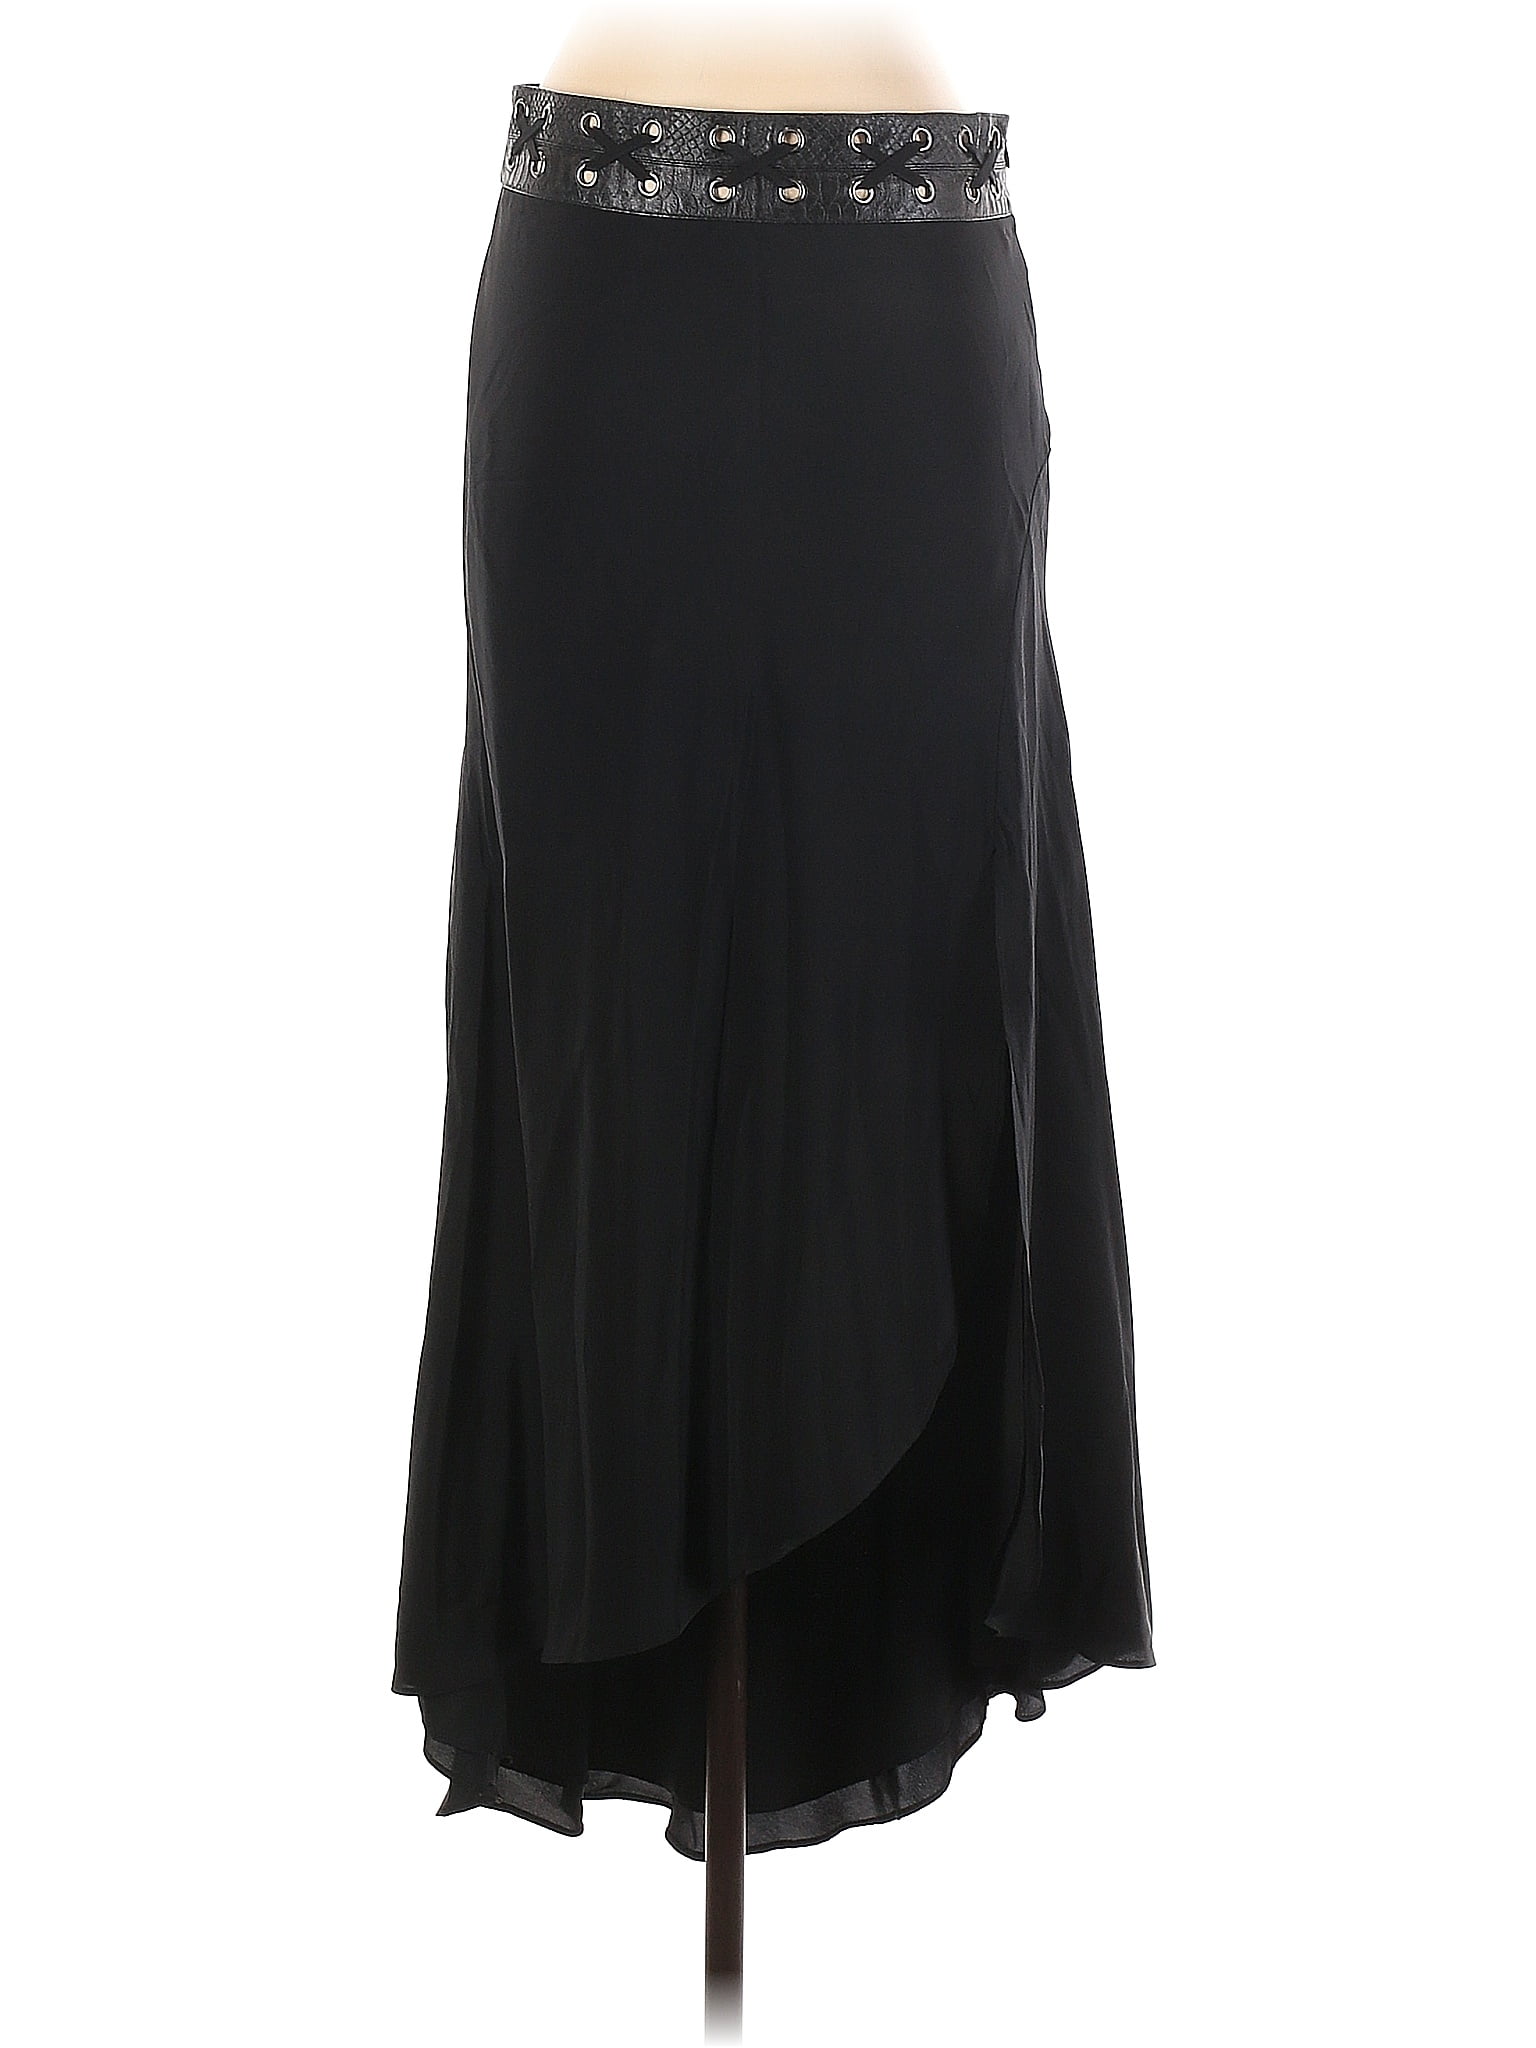 Haute Hippie 100% Silk Black Casual Skirt Size 4 - 82% off | thredUP